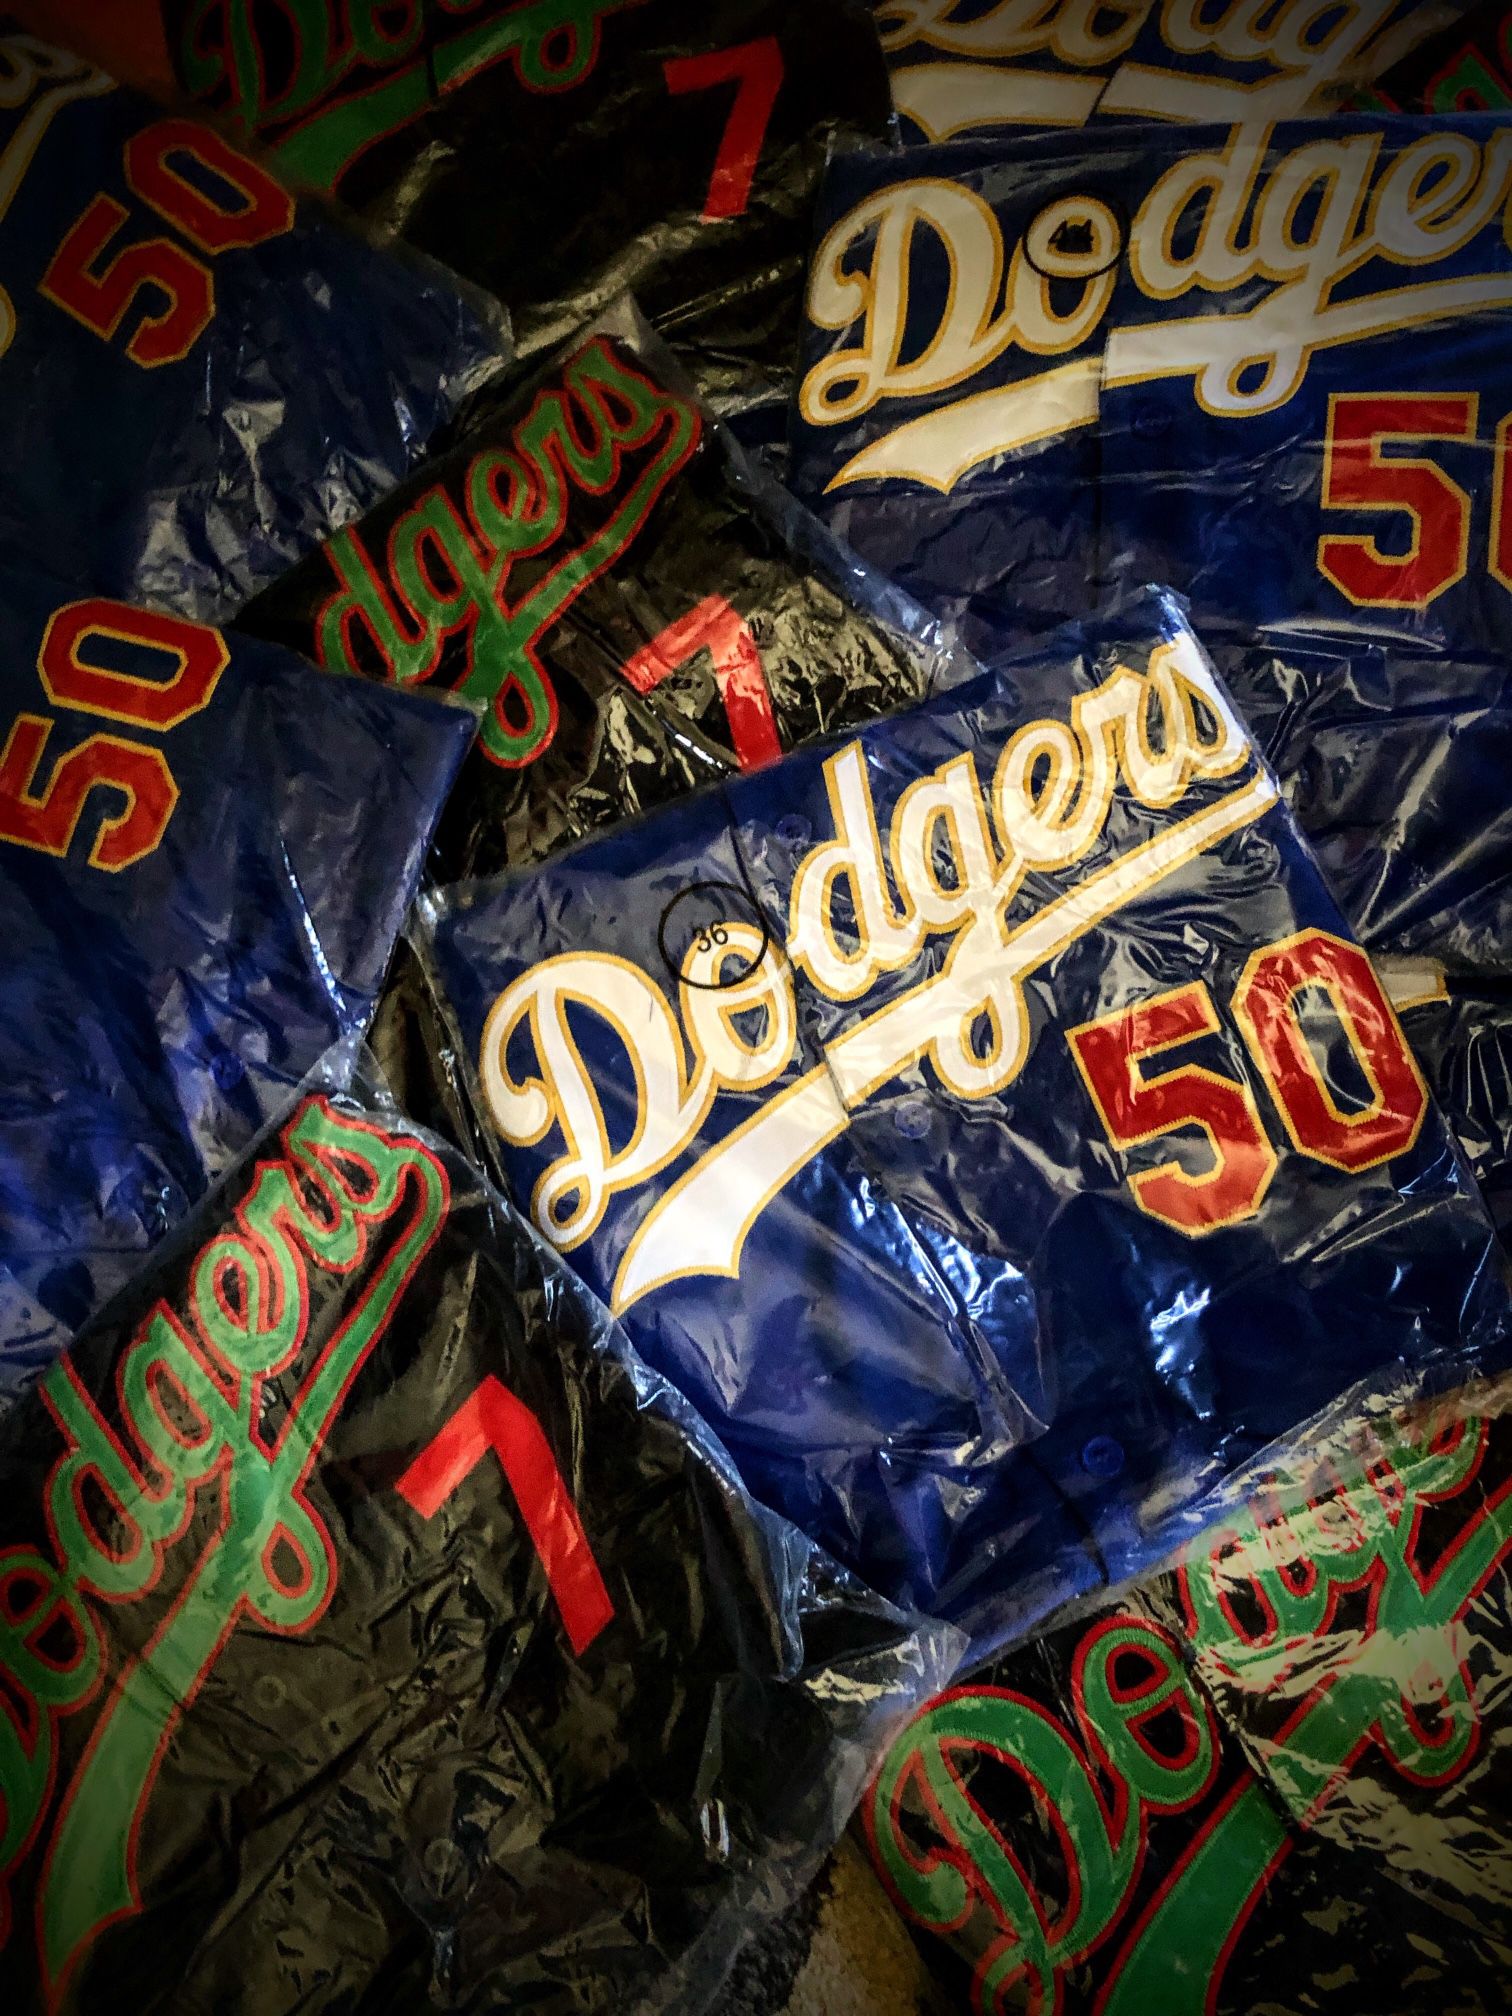 Kobe Dodgers Jersey #8 #24 – Nopales Clothing